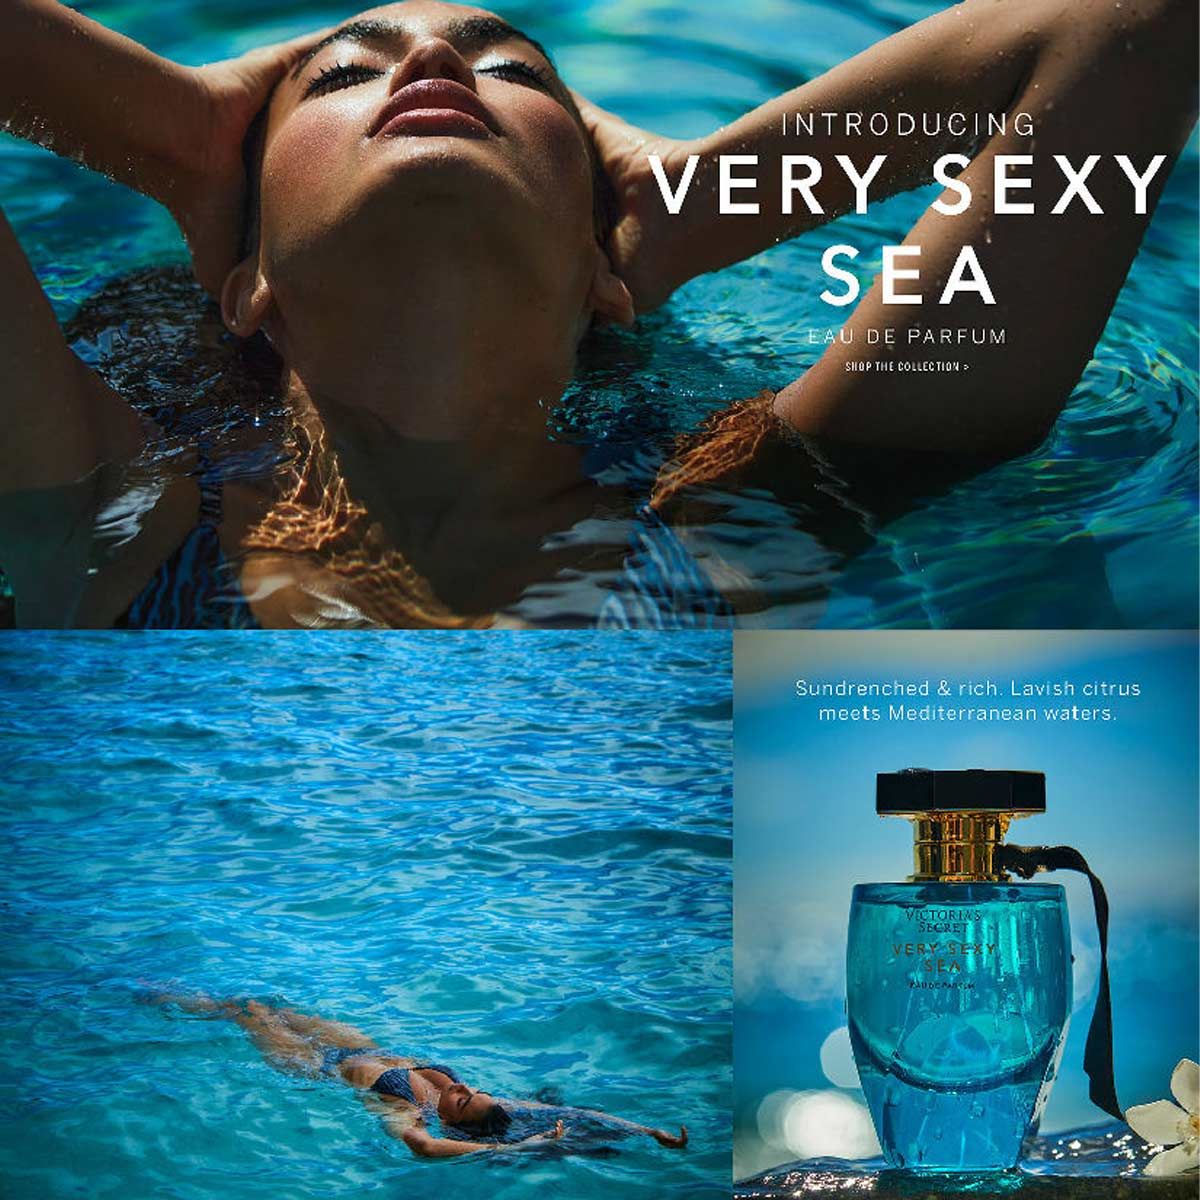  Victoria's Secret  Very Sexy Sea  Eau de Parfum 